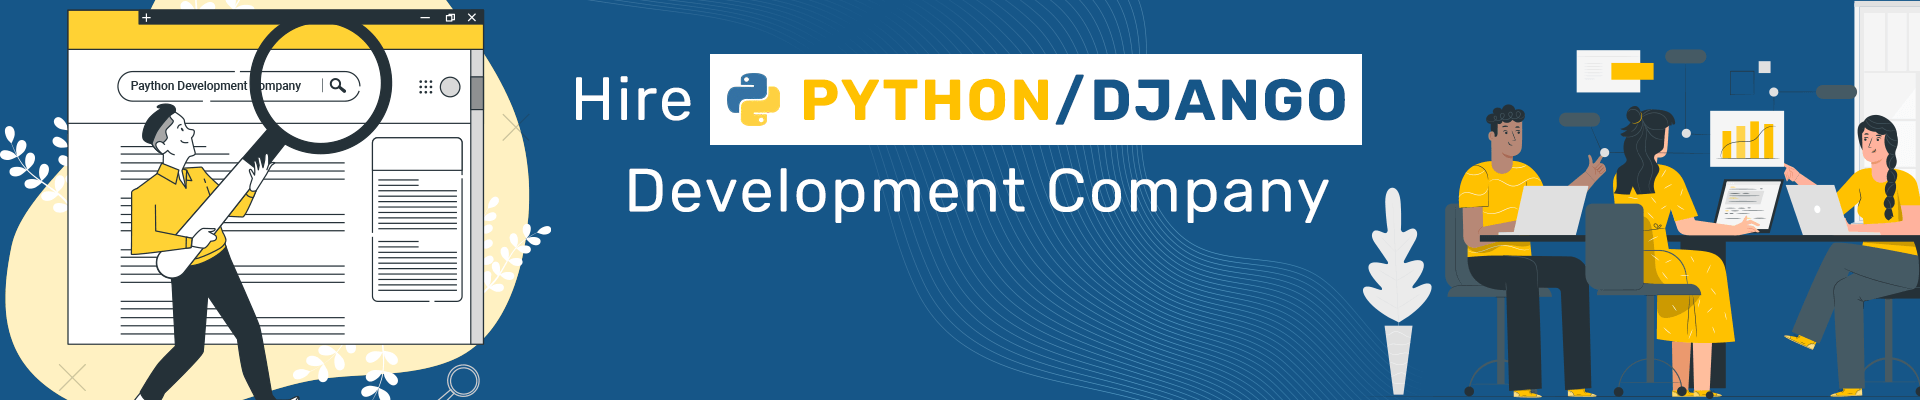 How to Find and Hire Python/Django Development Company?